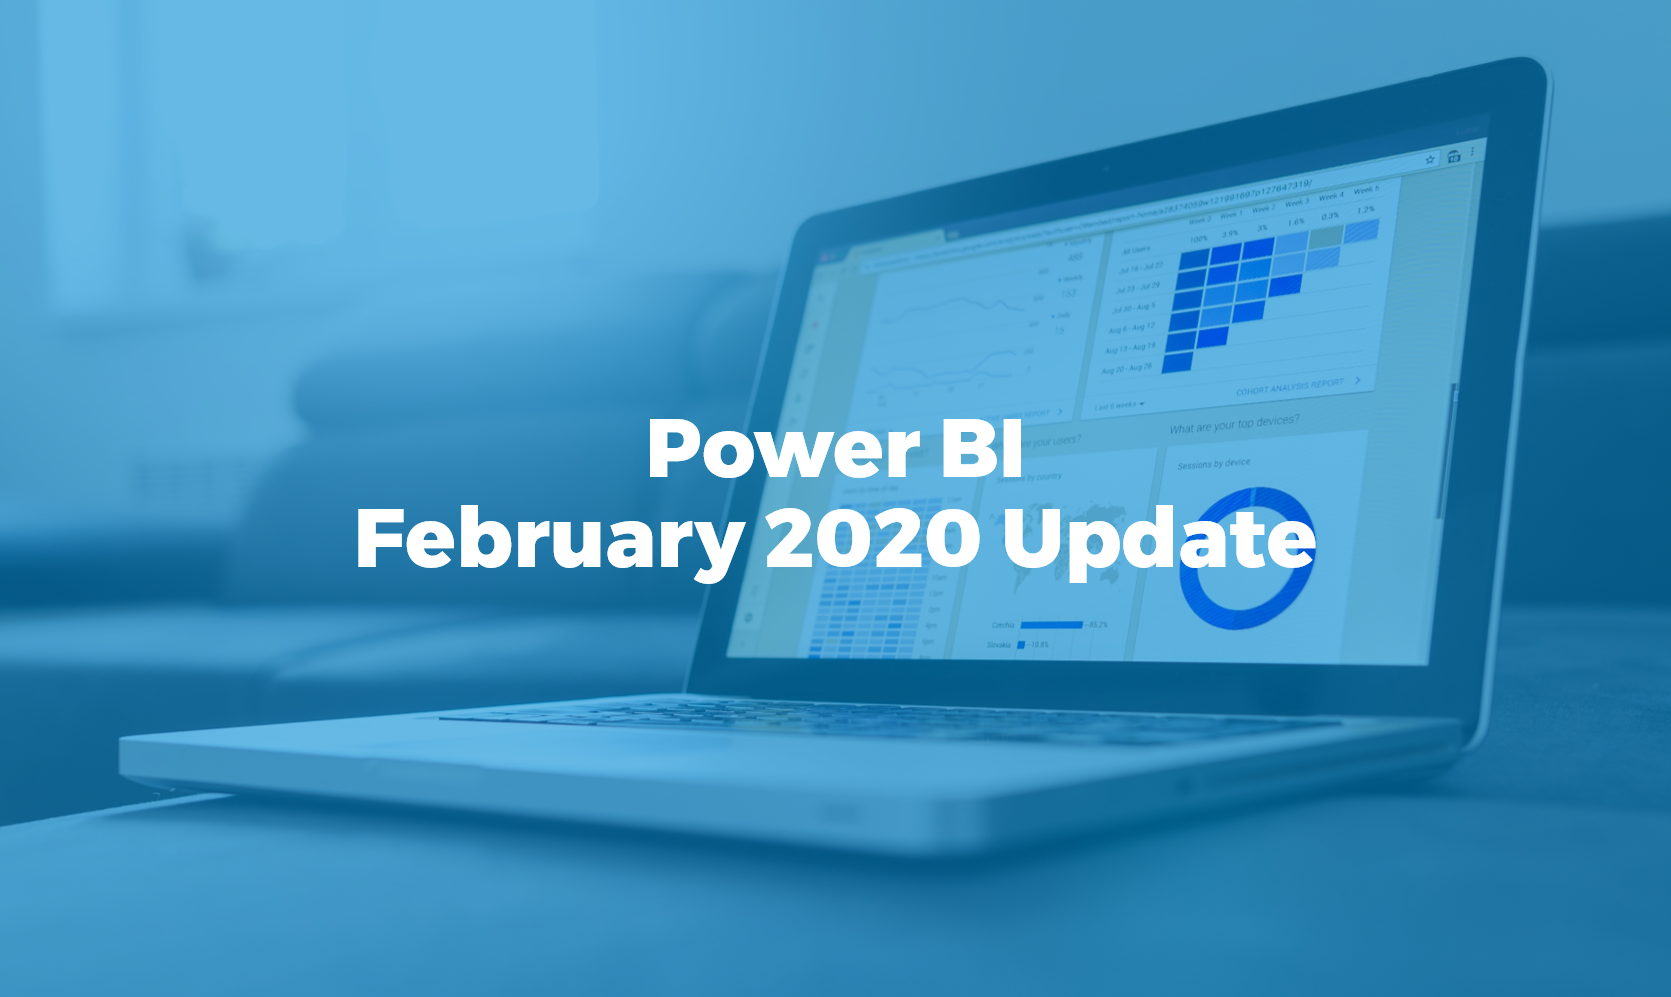 What's New in Power BI - February 2020 Update